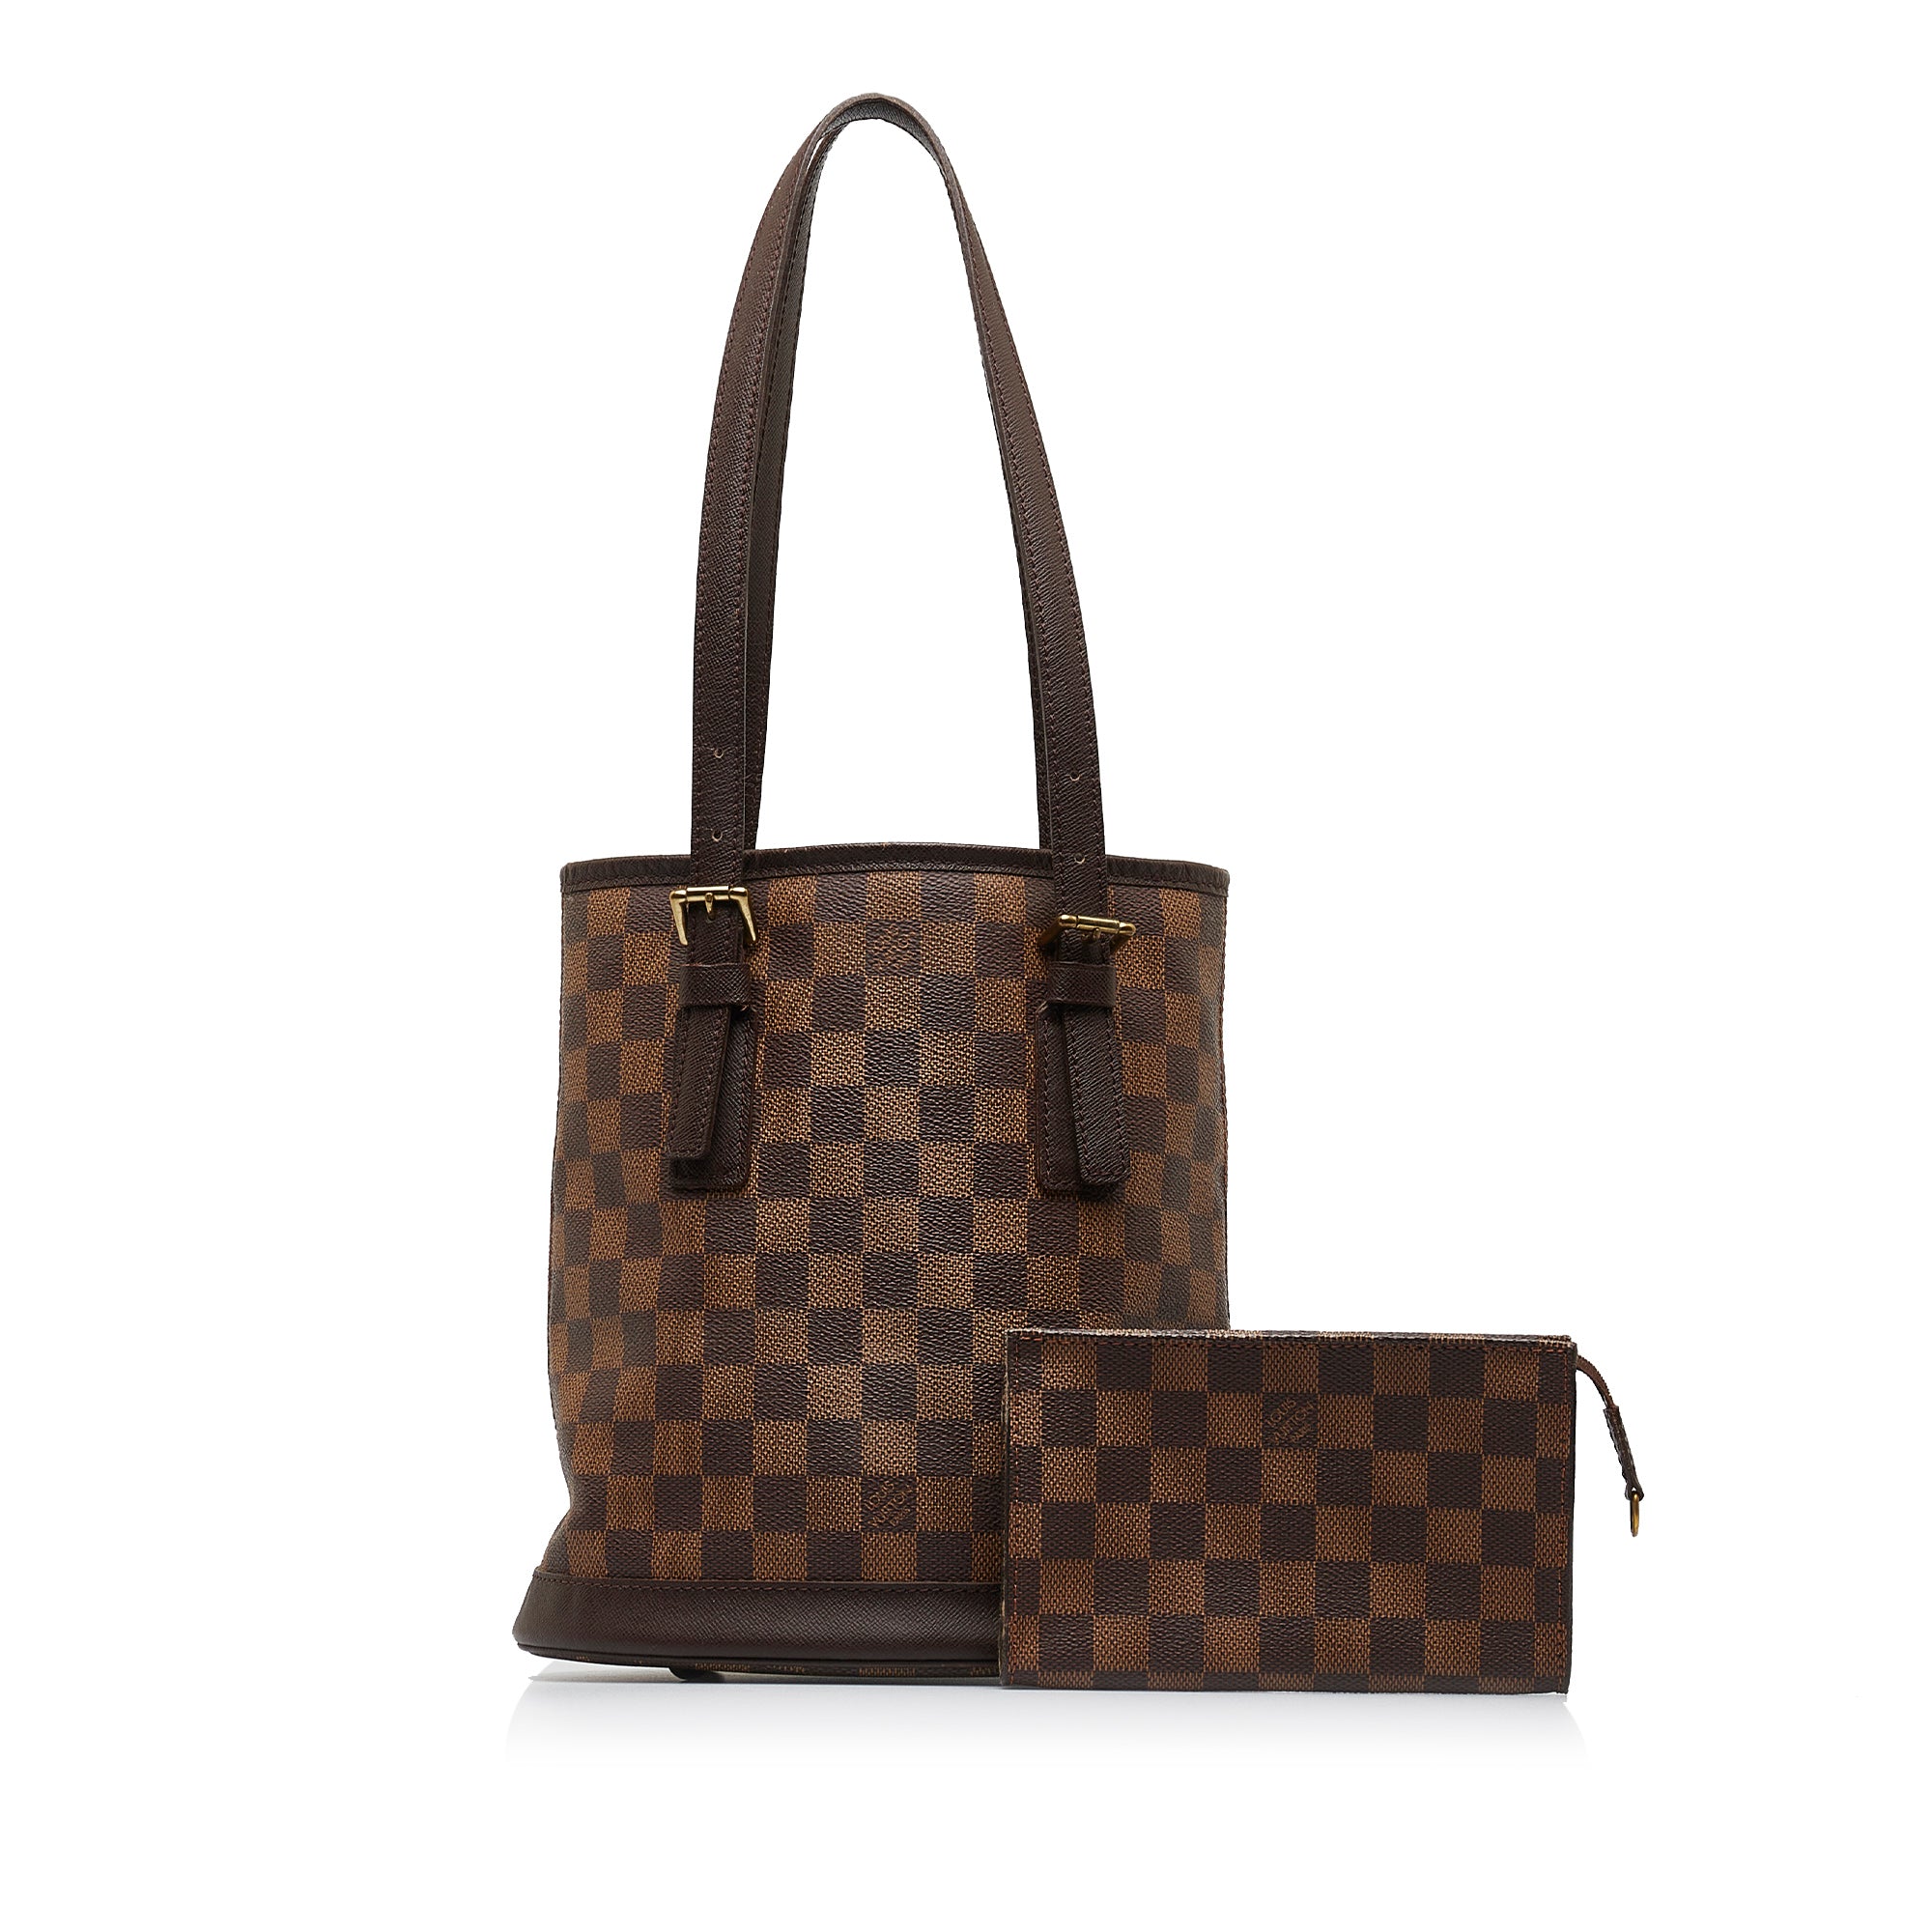 Pre-Owned Louis Vuitton Brera Damier Ebene Handbag - Excellent Condition 